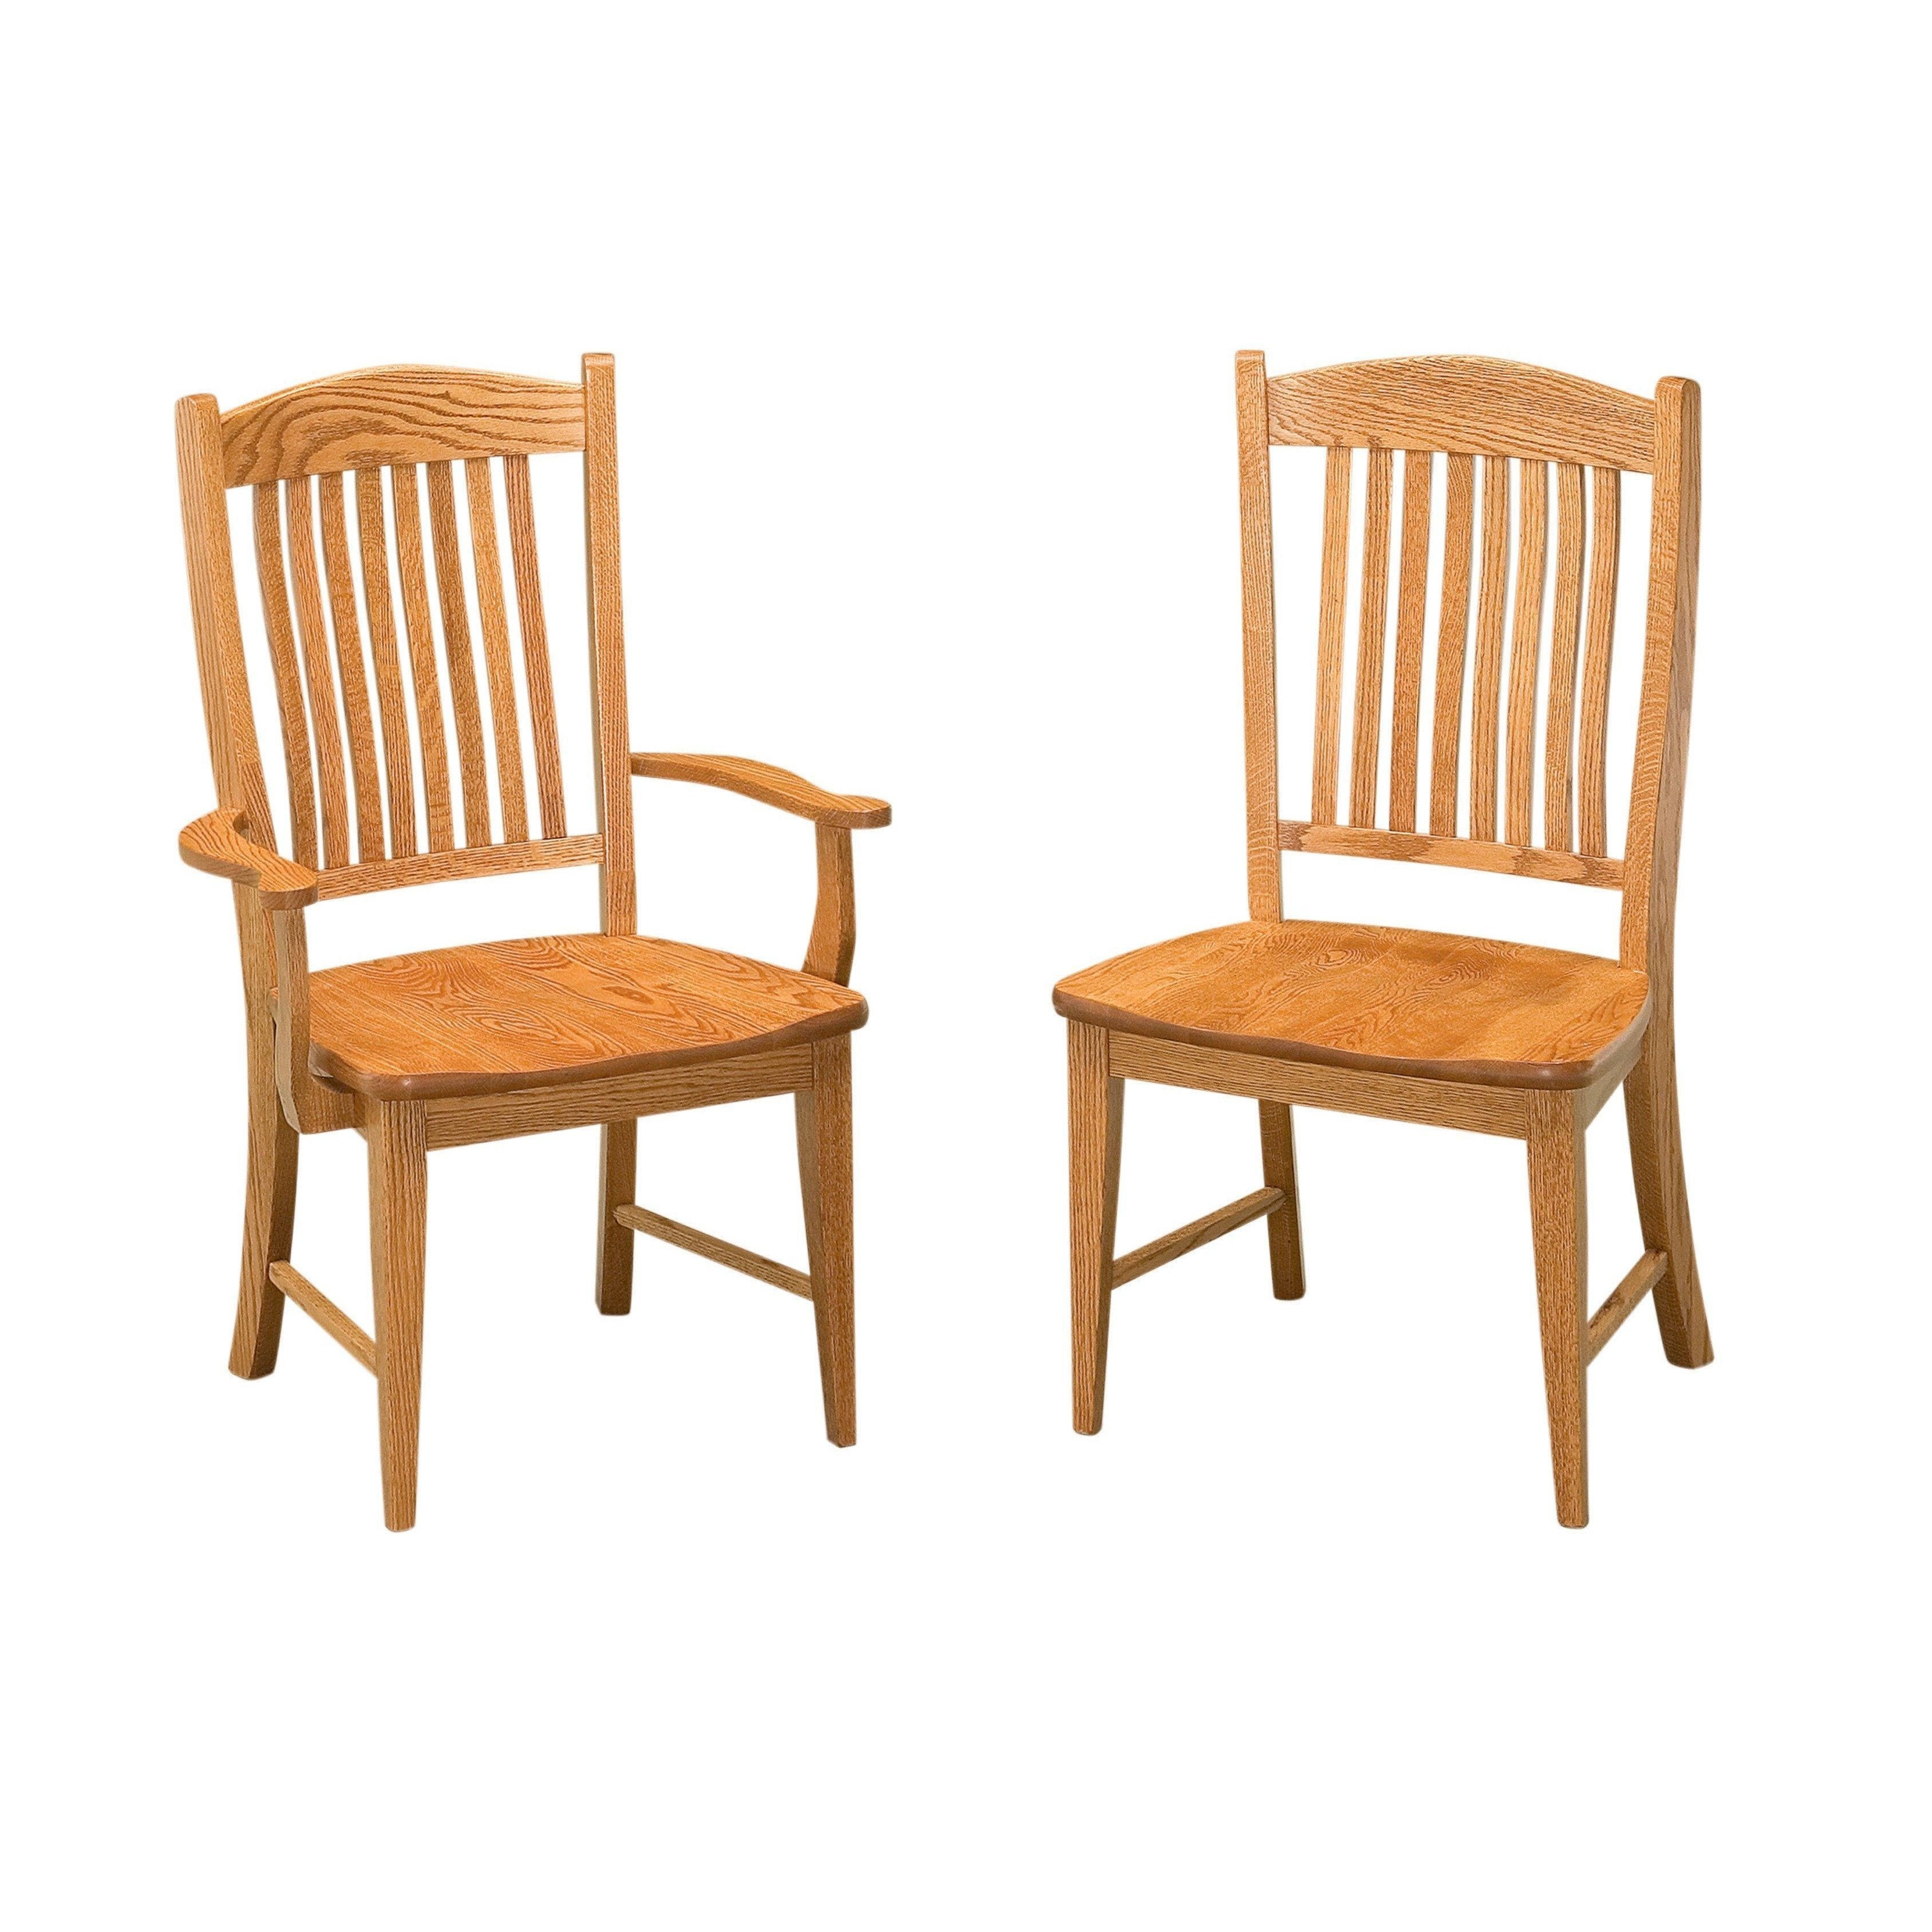 lyndon-chairs-260217.jpg